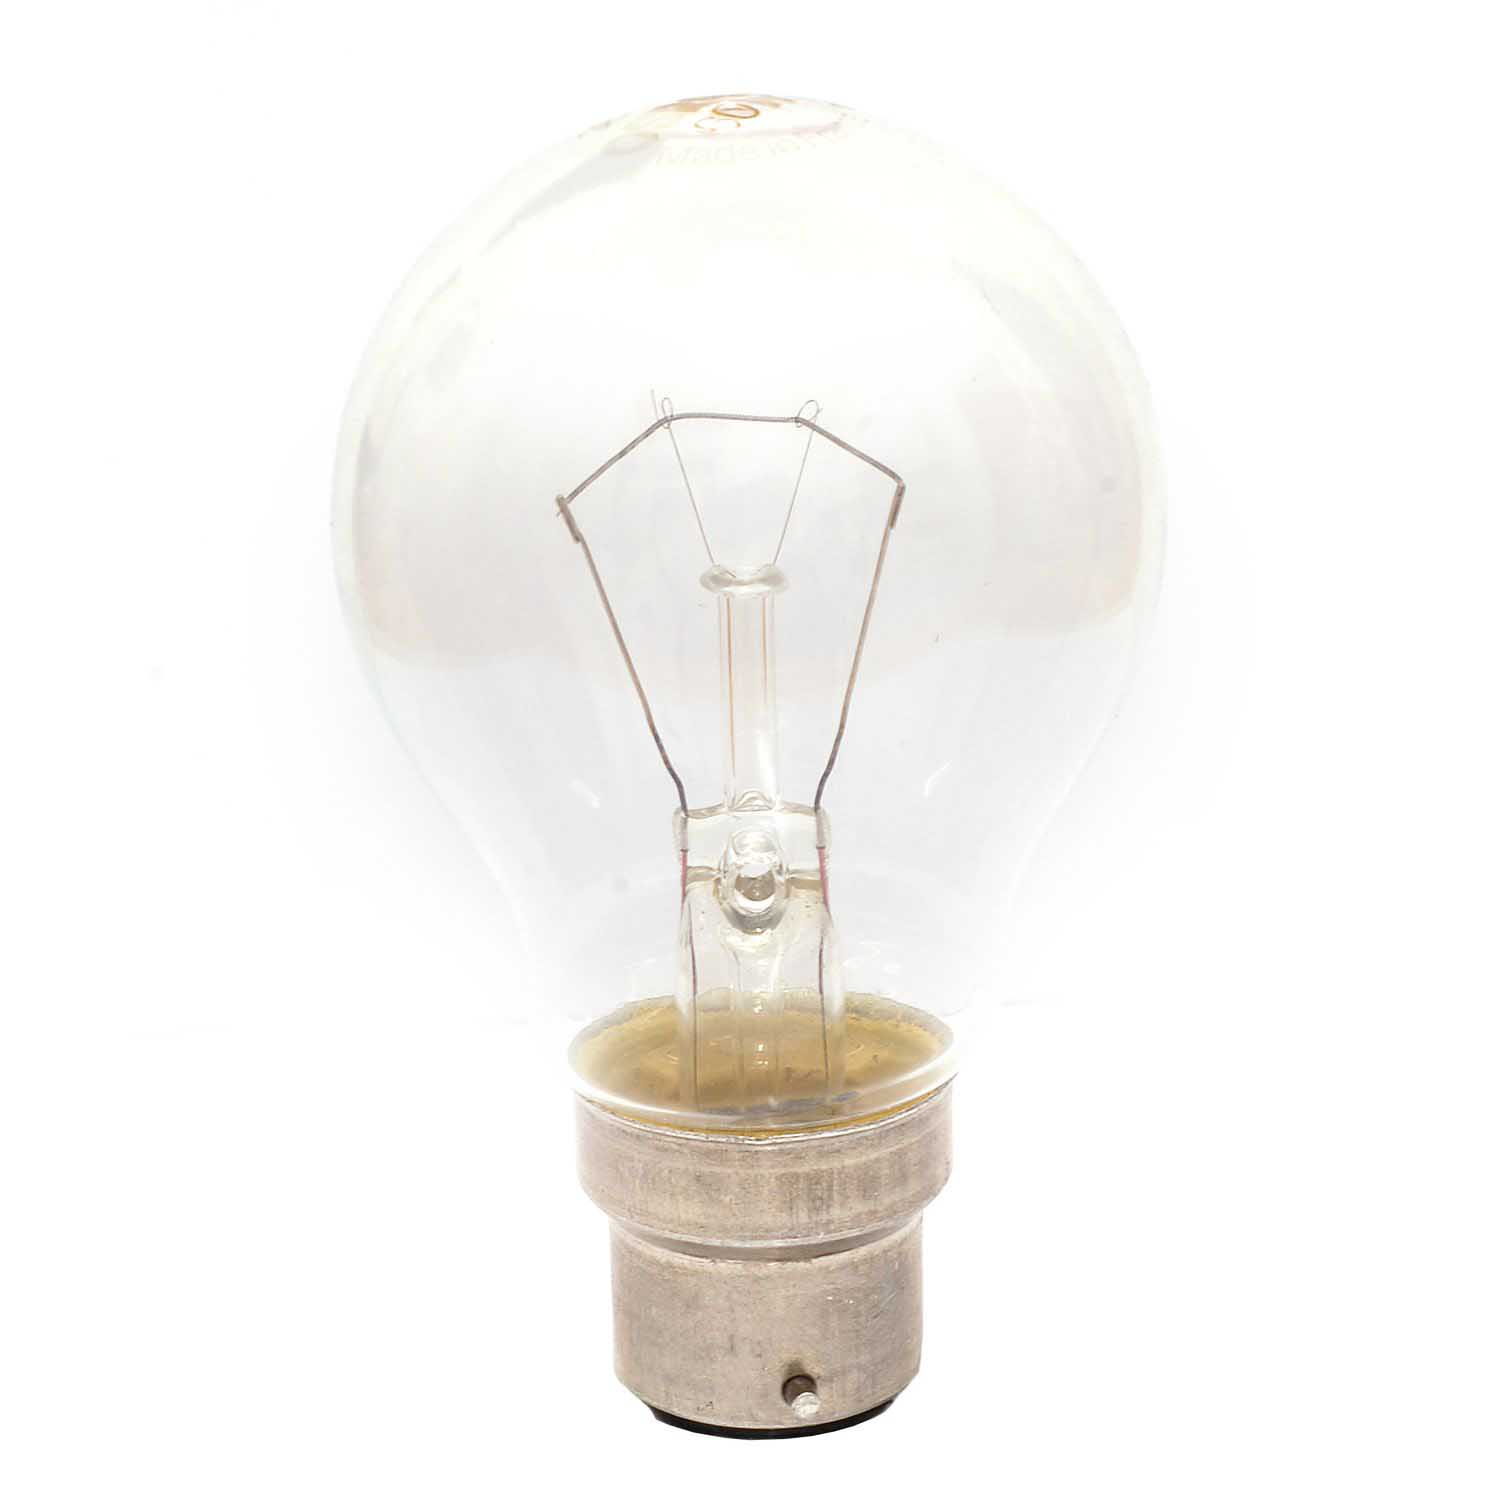 Pronunciar Interesante Manifiesto Bombillas LED vs. bombillas de bajo consumo